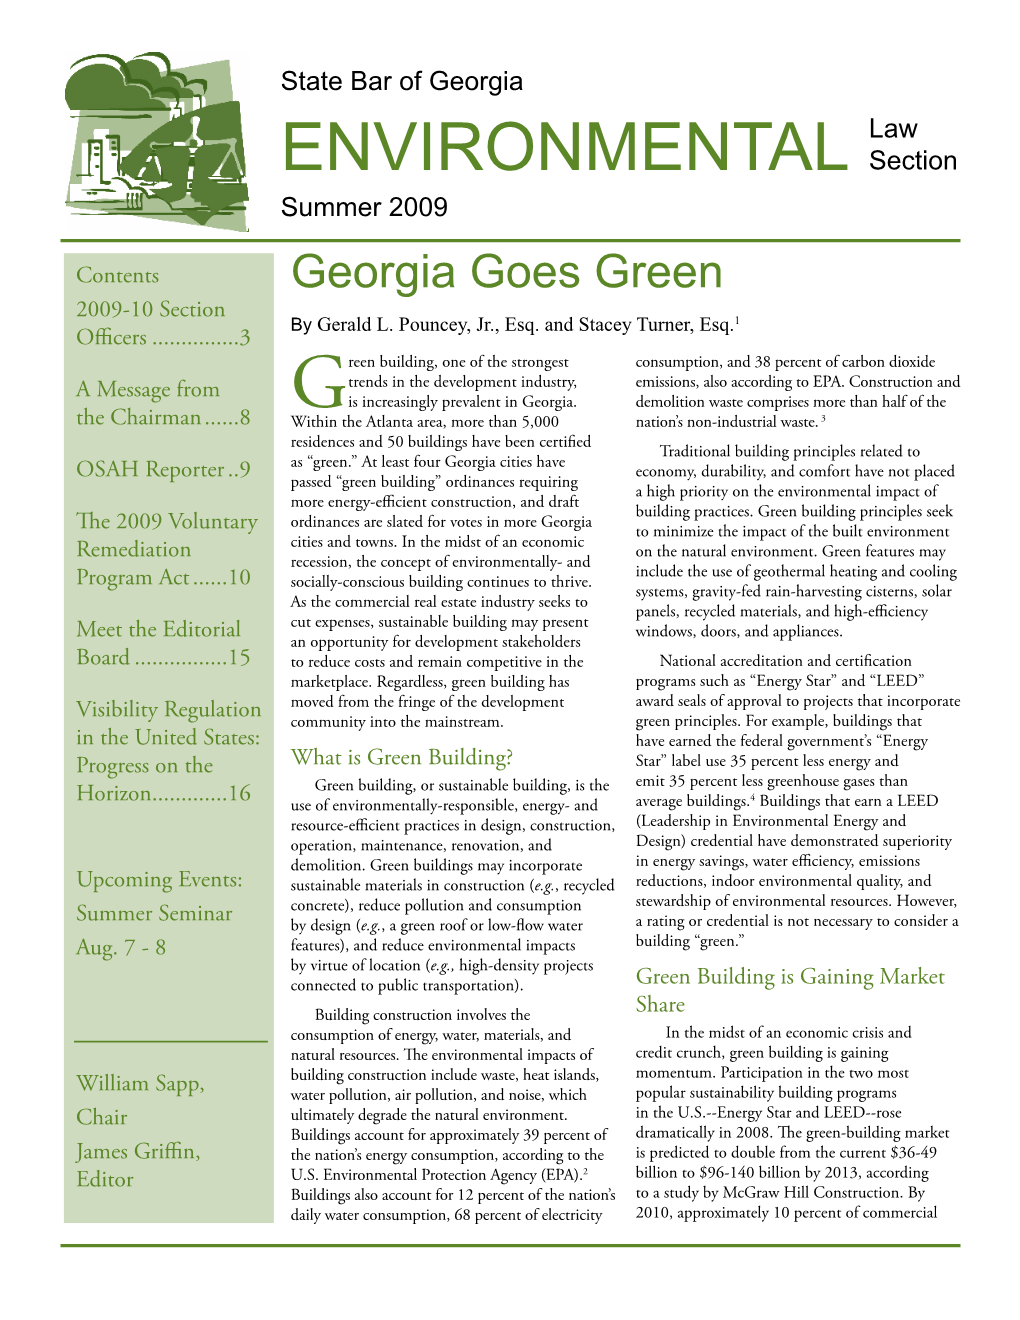 Environmental Section Summer 2009